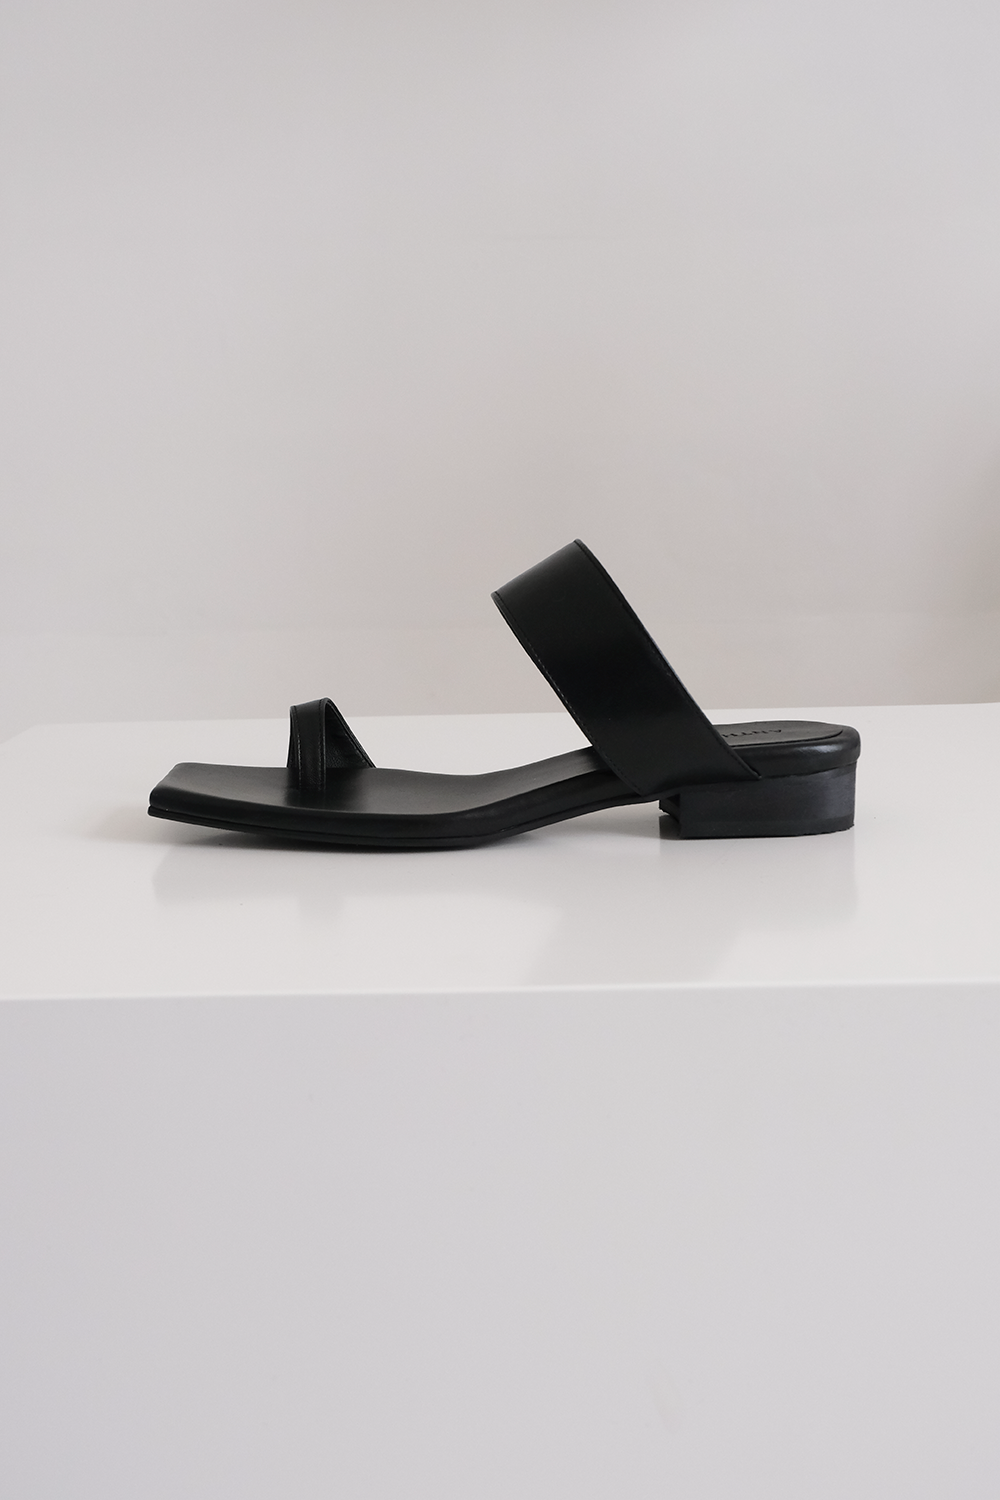 ANTHÈSE Celina sandal, black